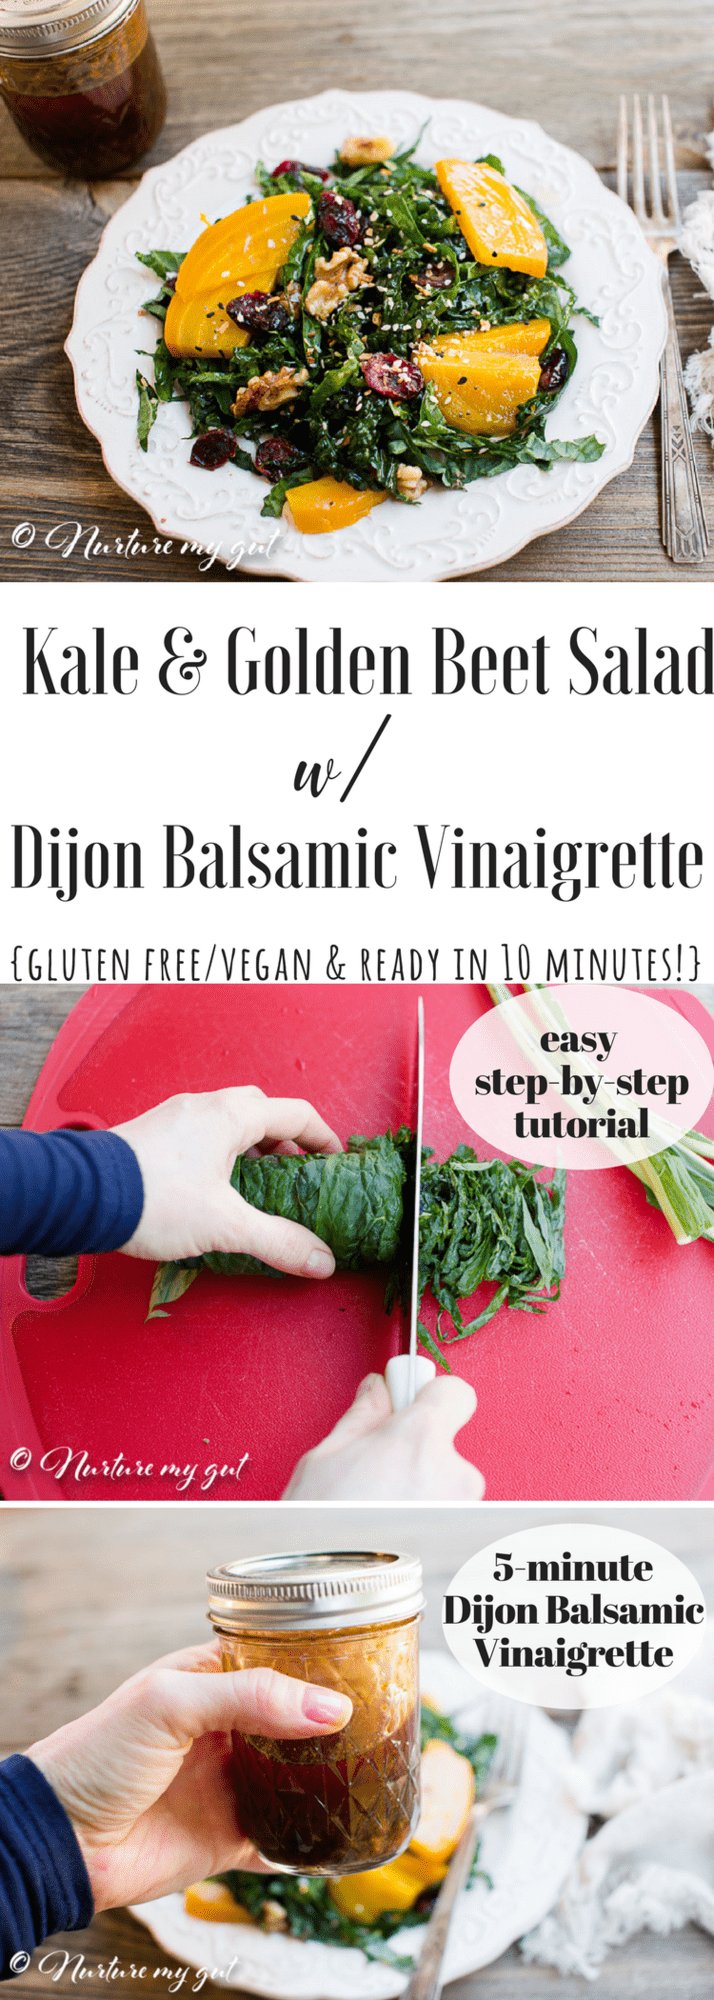 Kale and Golden Beet Salad with Dijon Balsamic Vinaigrette